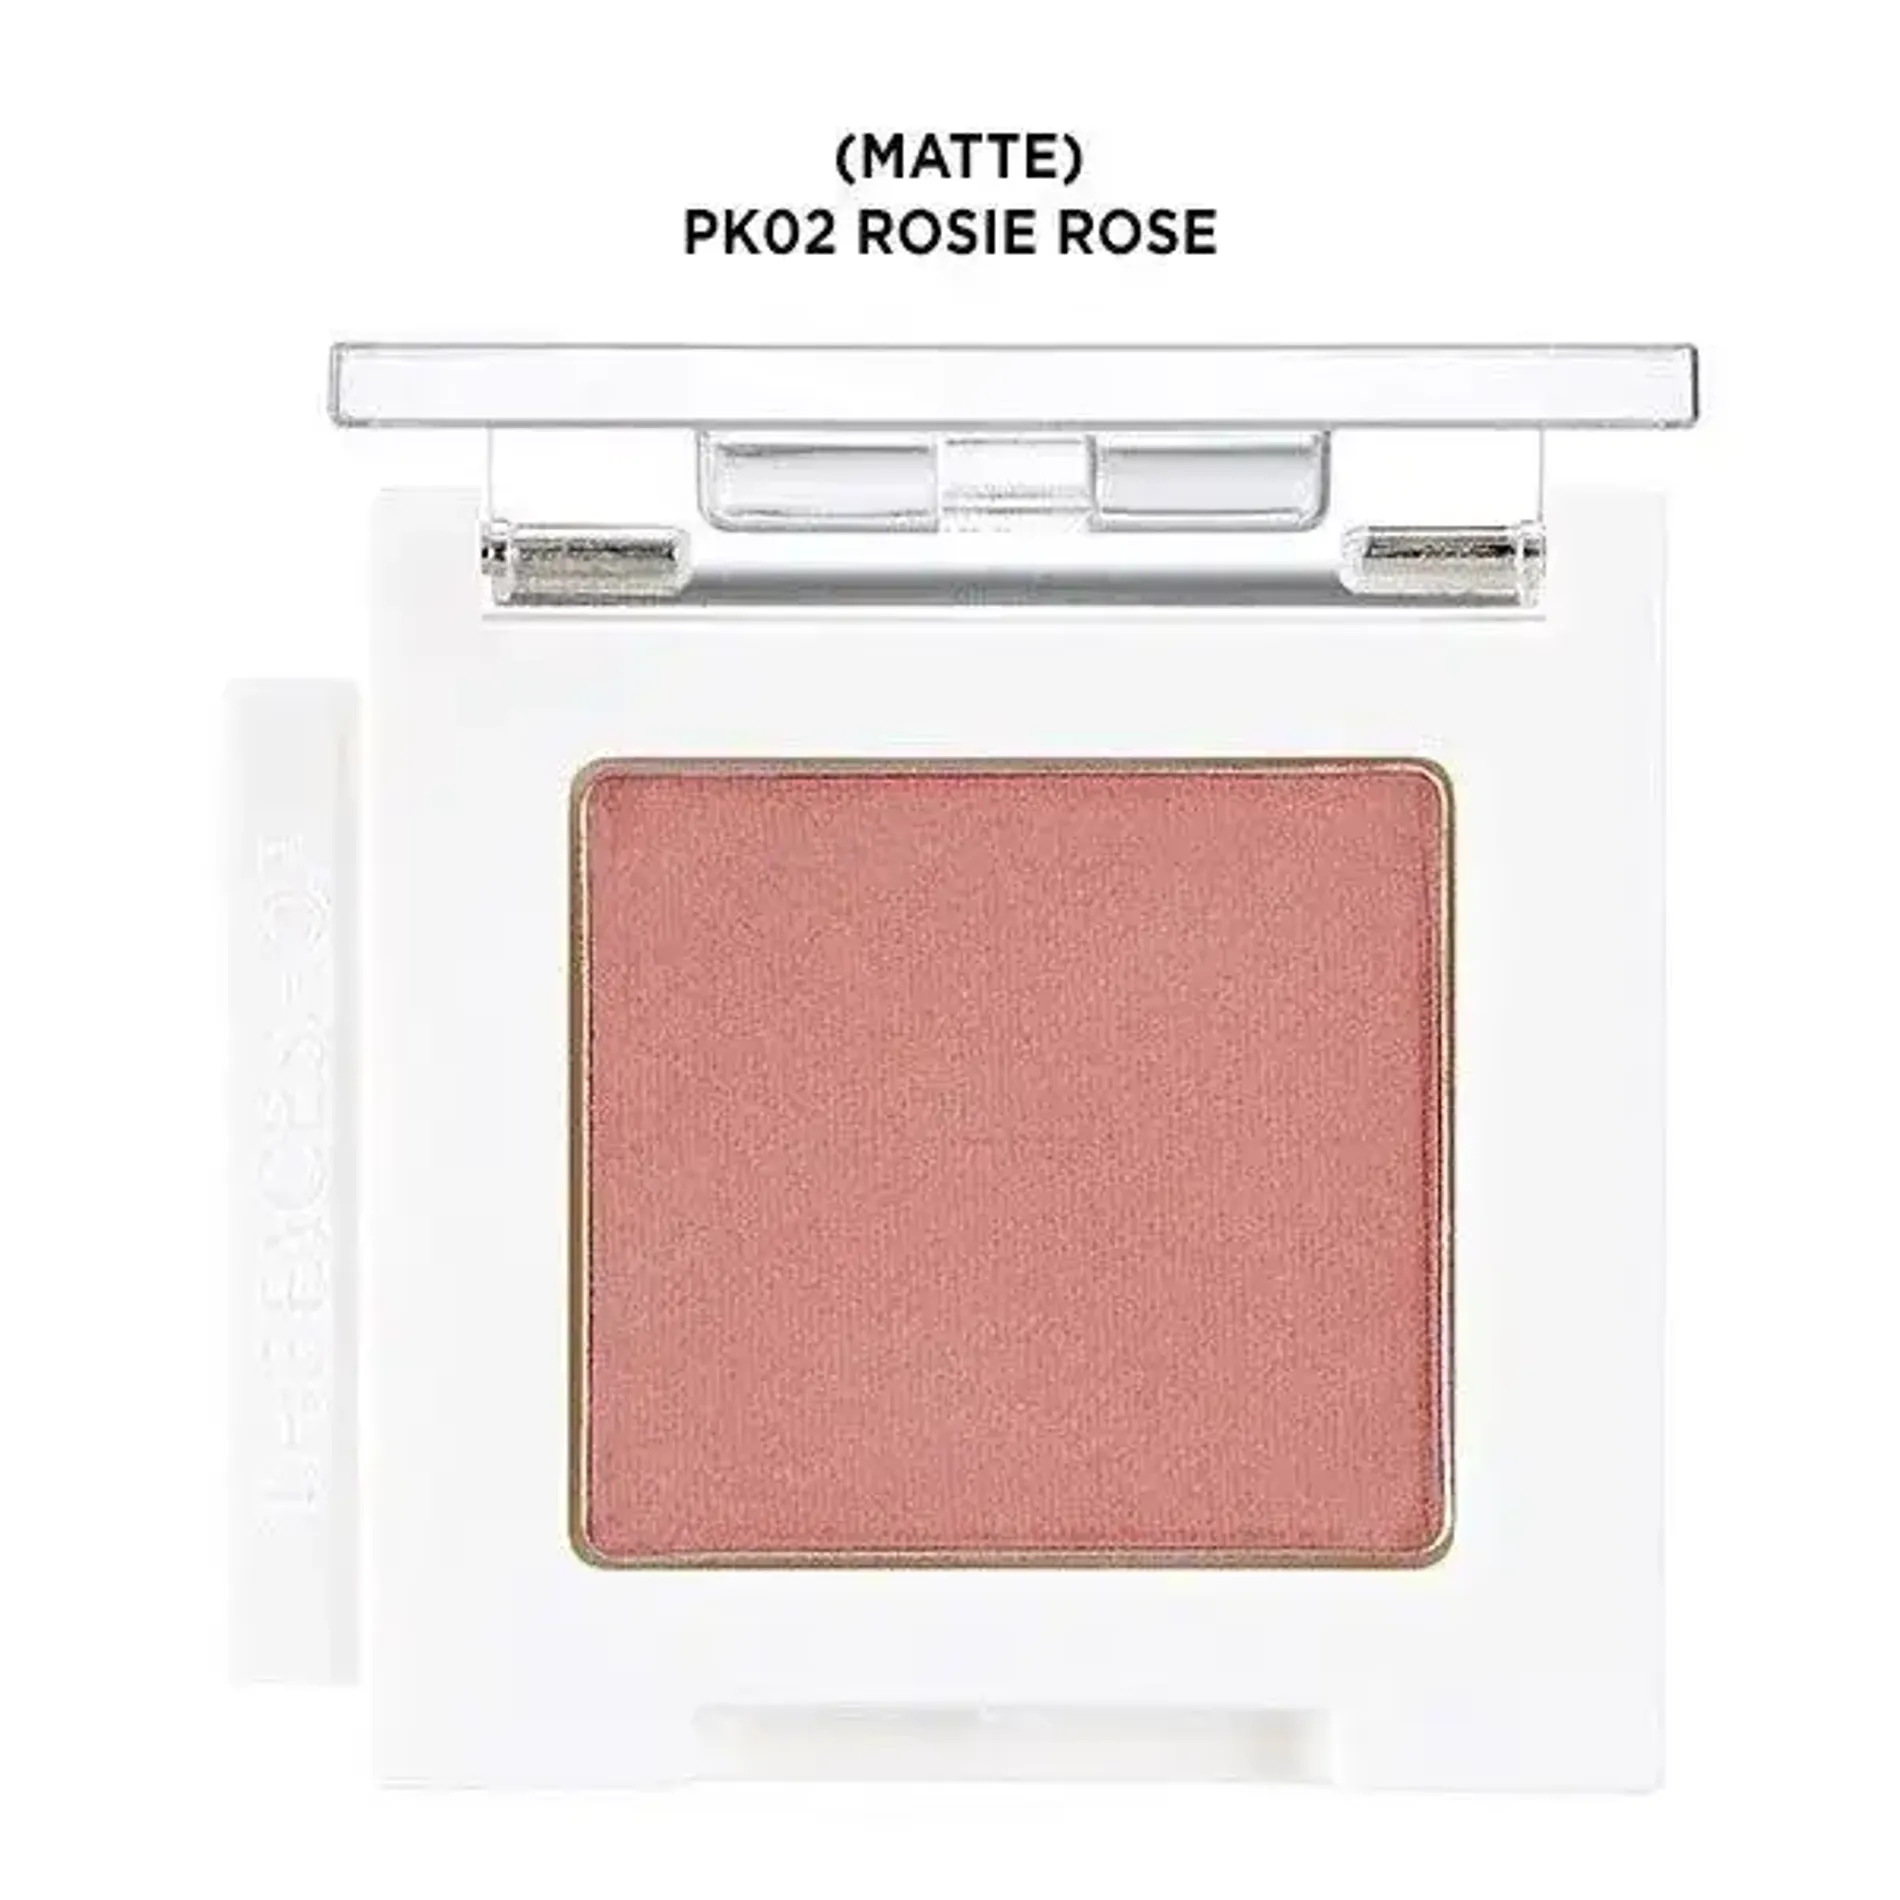 mau-mat-dang-li-mono-cube-eyeshadow-matte-pk02-rosie-rose-1